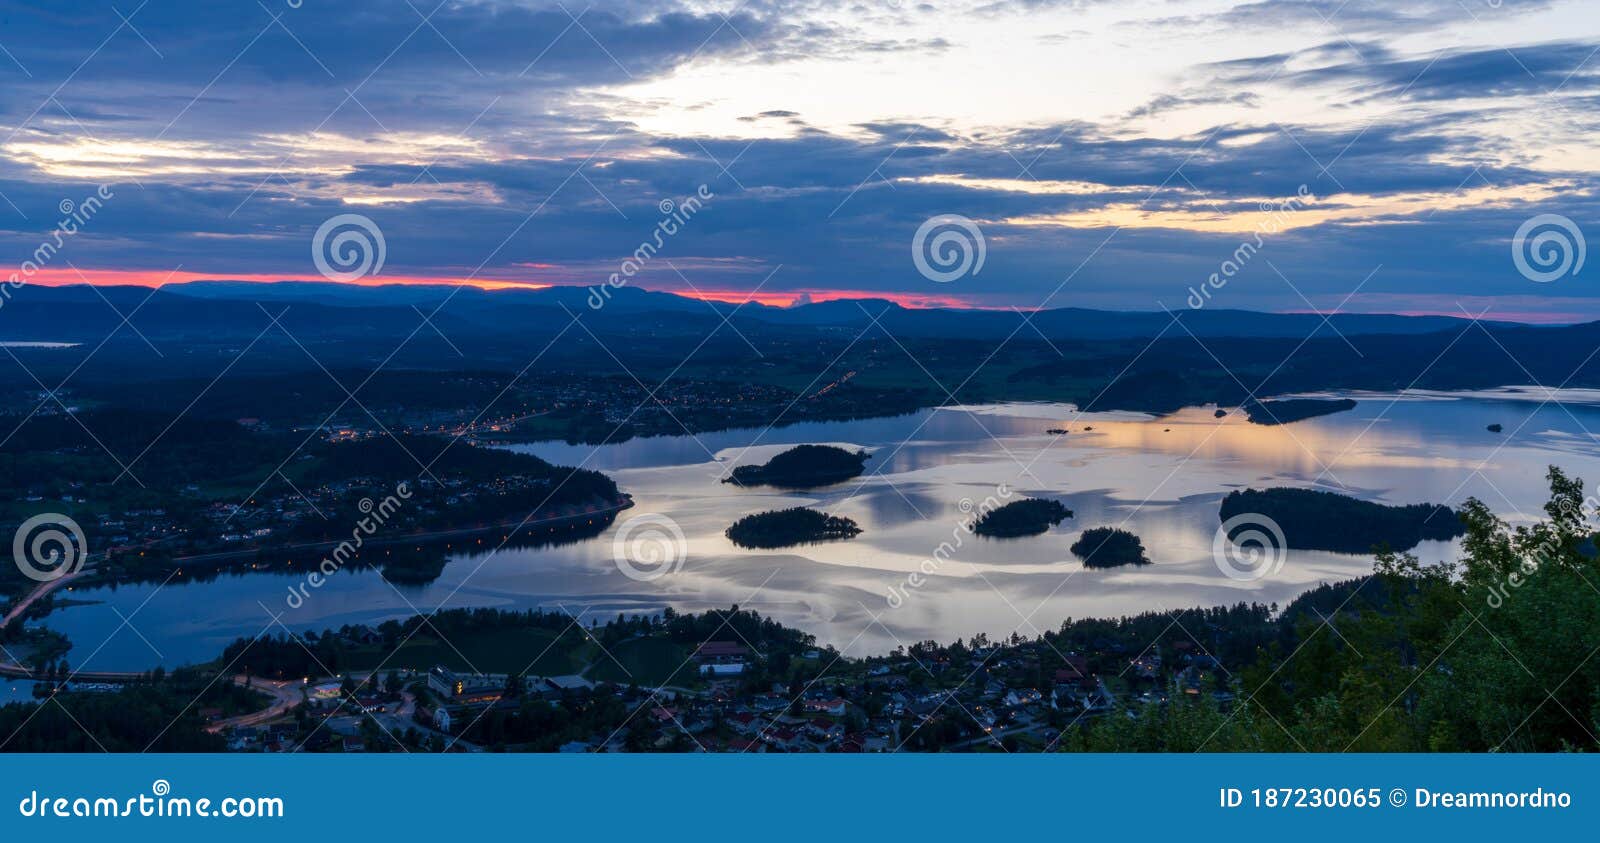 unset over tyrifjorden called lake tyri from the viewpoint kongens utsikt